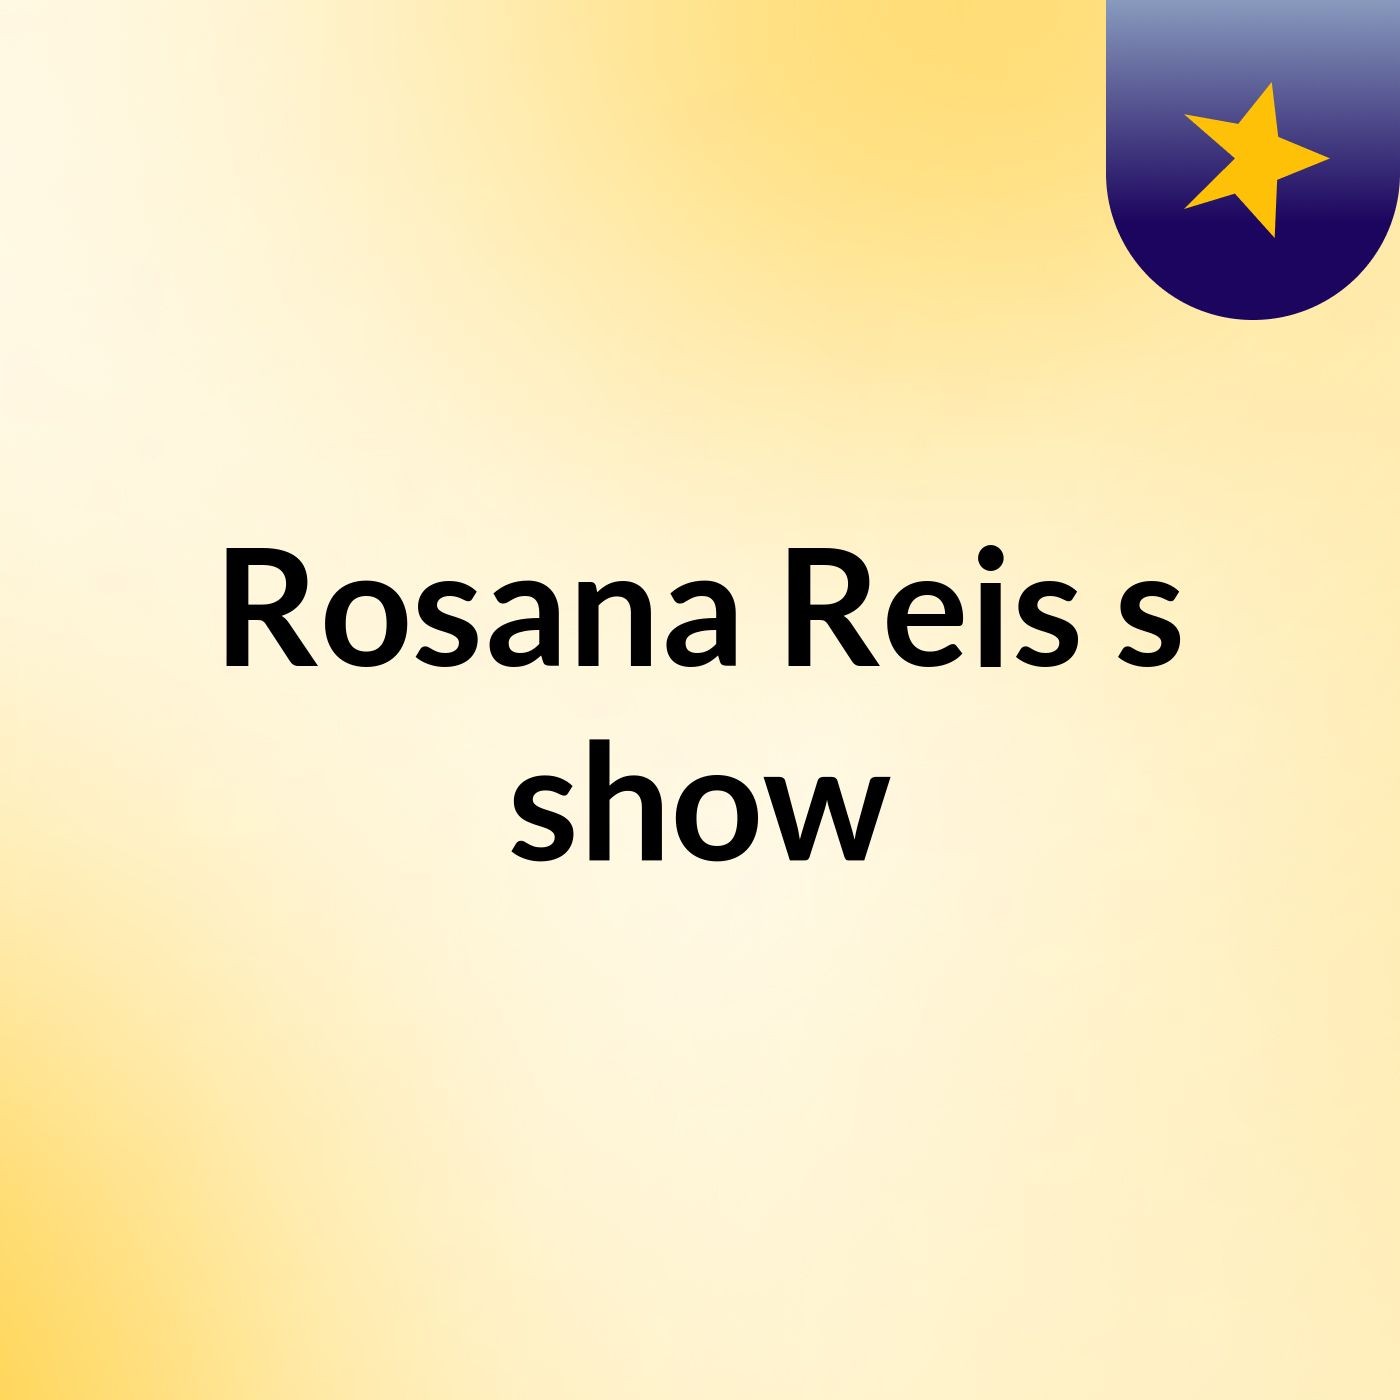 Rosana Reis's show